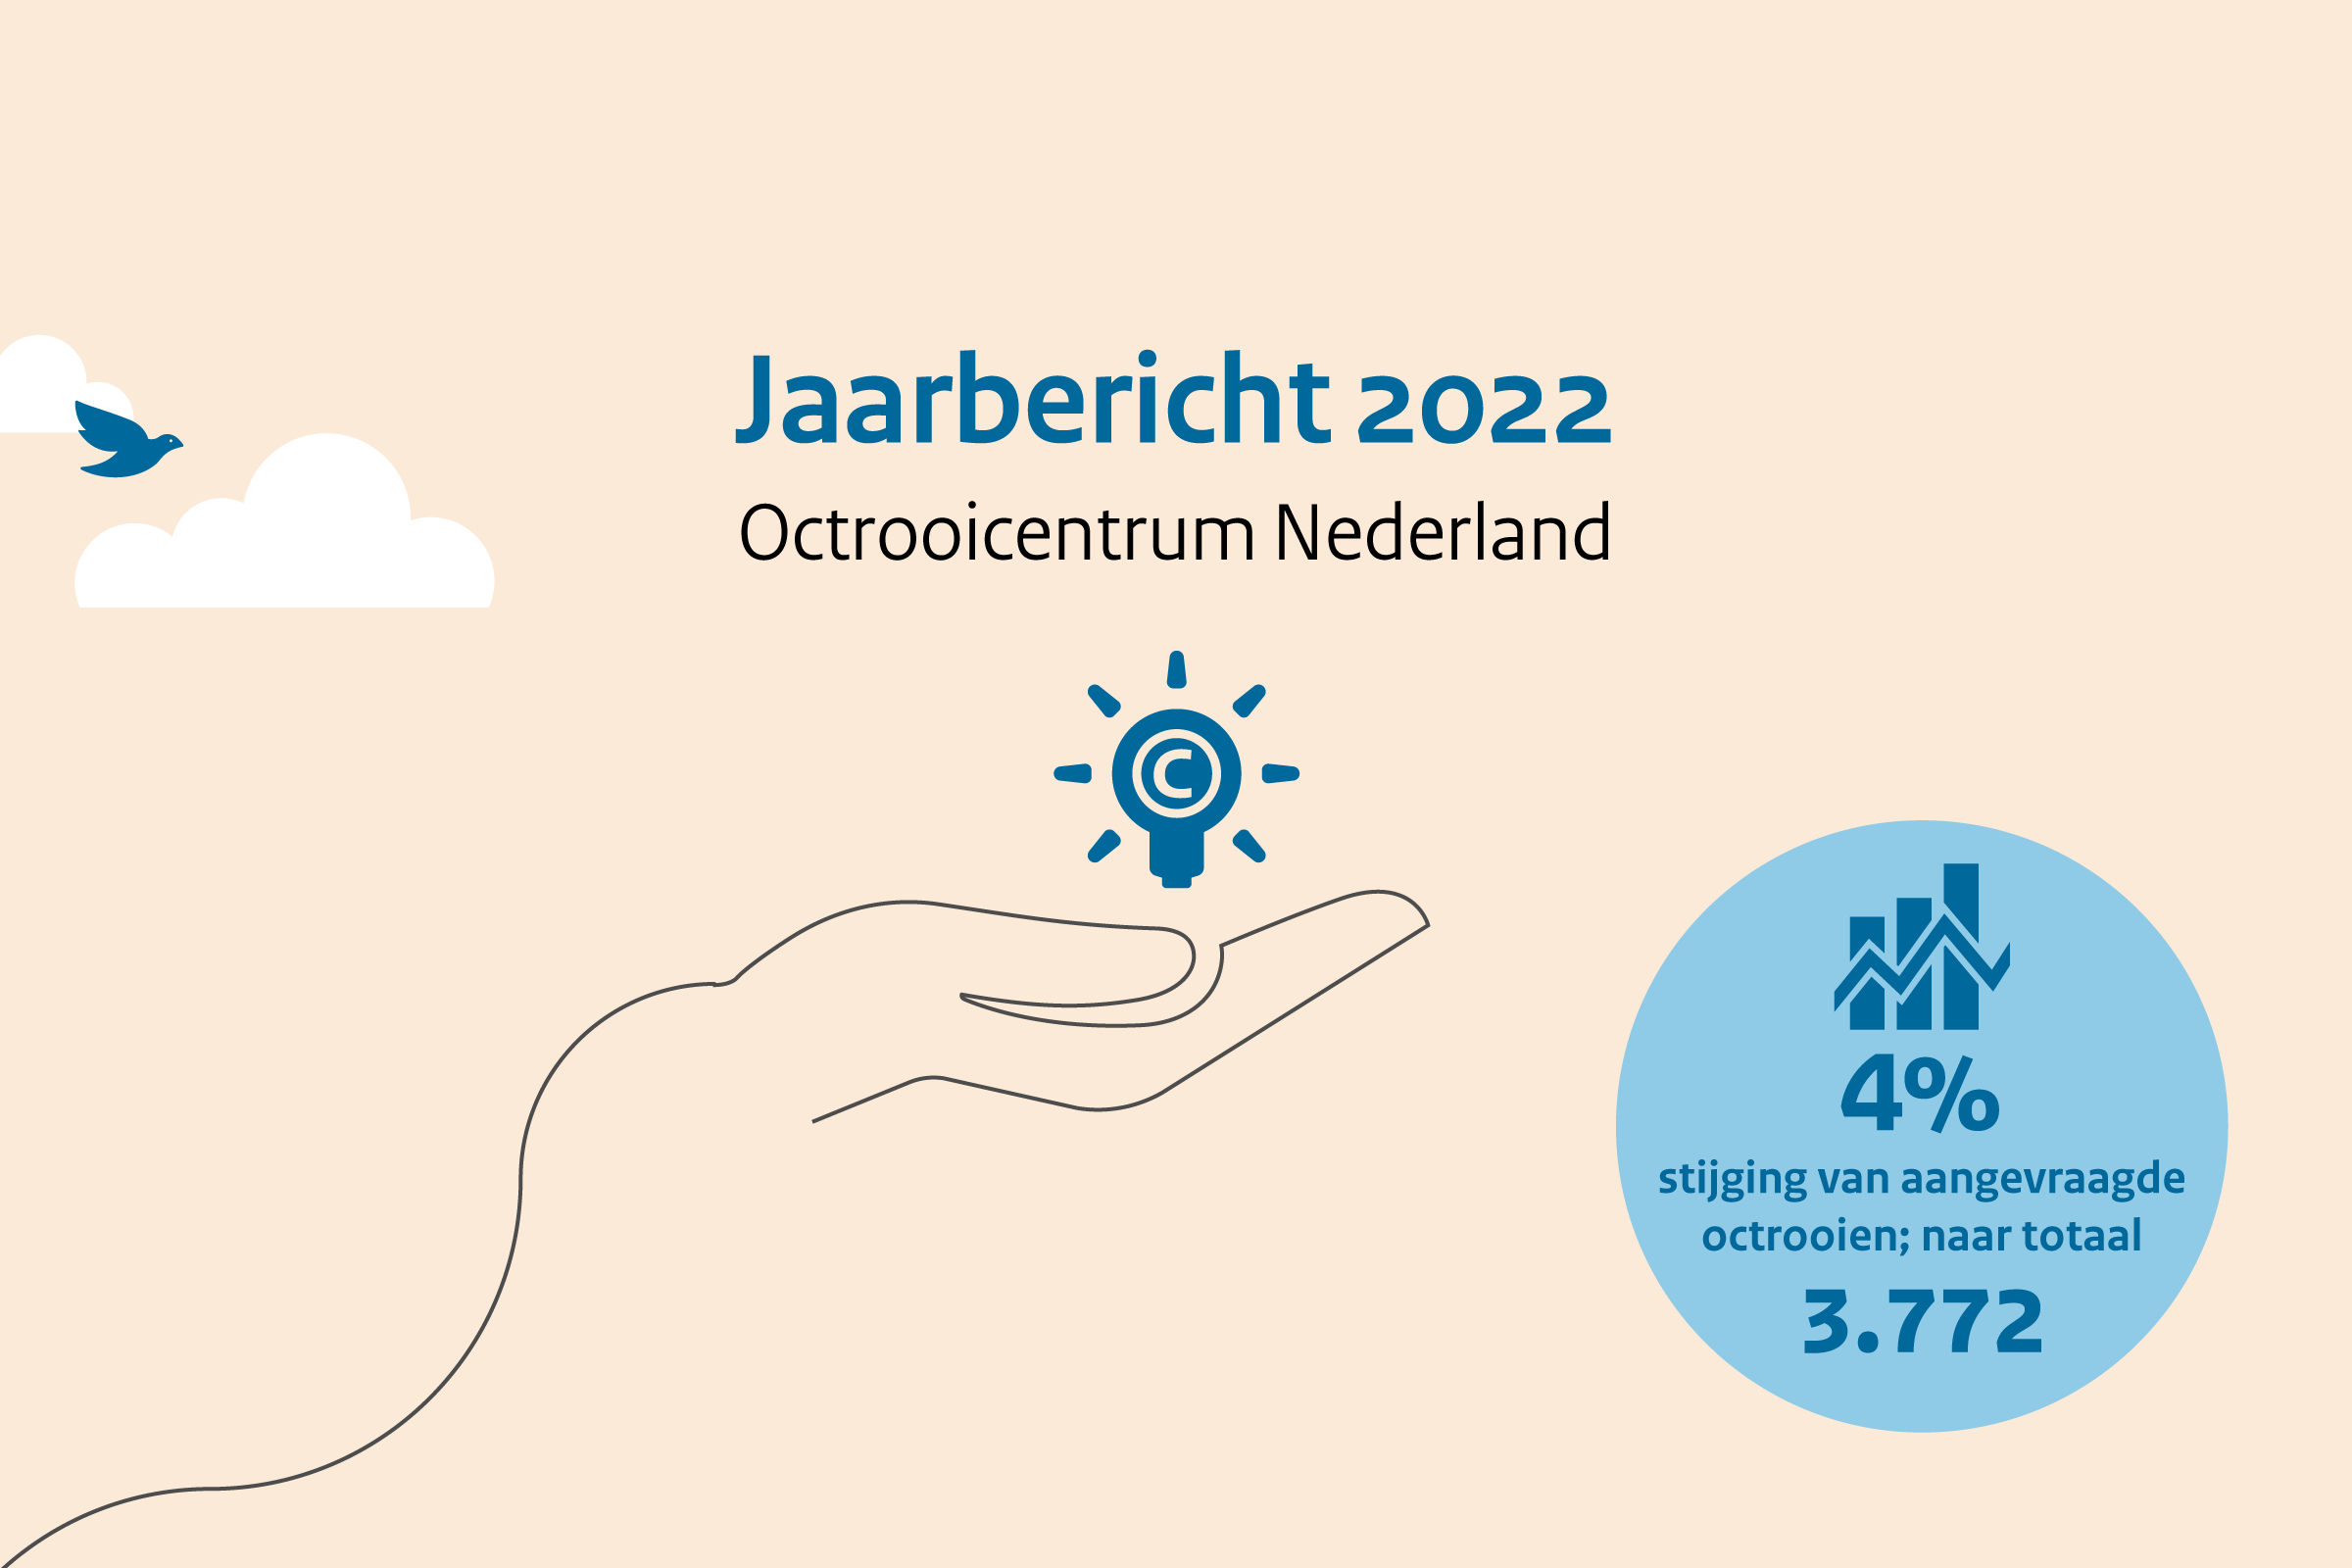 Jaarbericht Octrooicentrum Nederland 2022